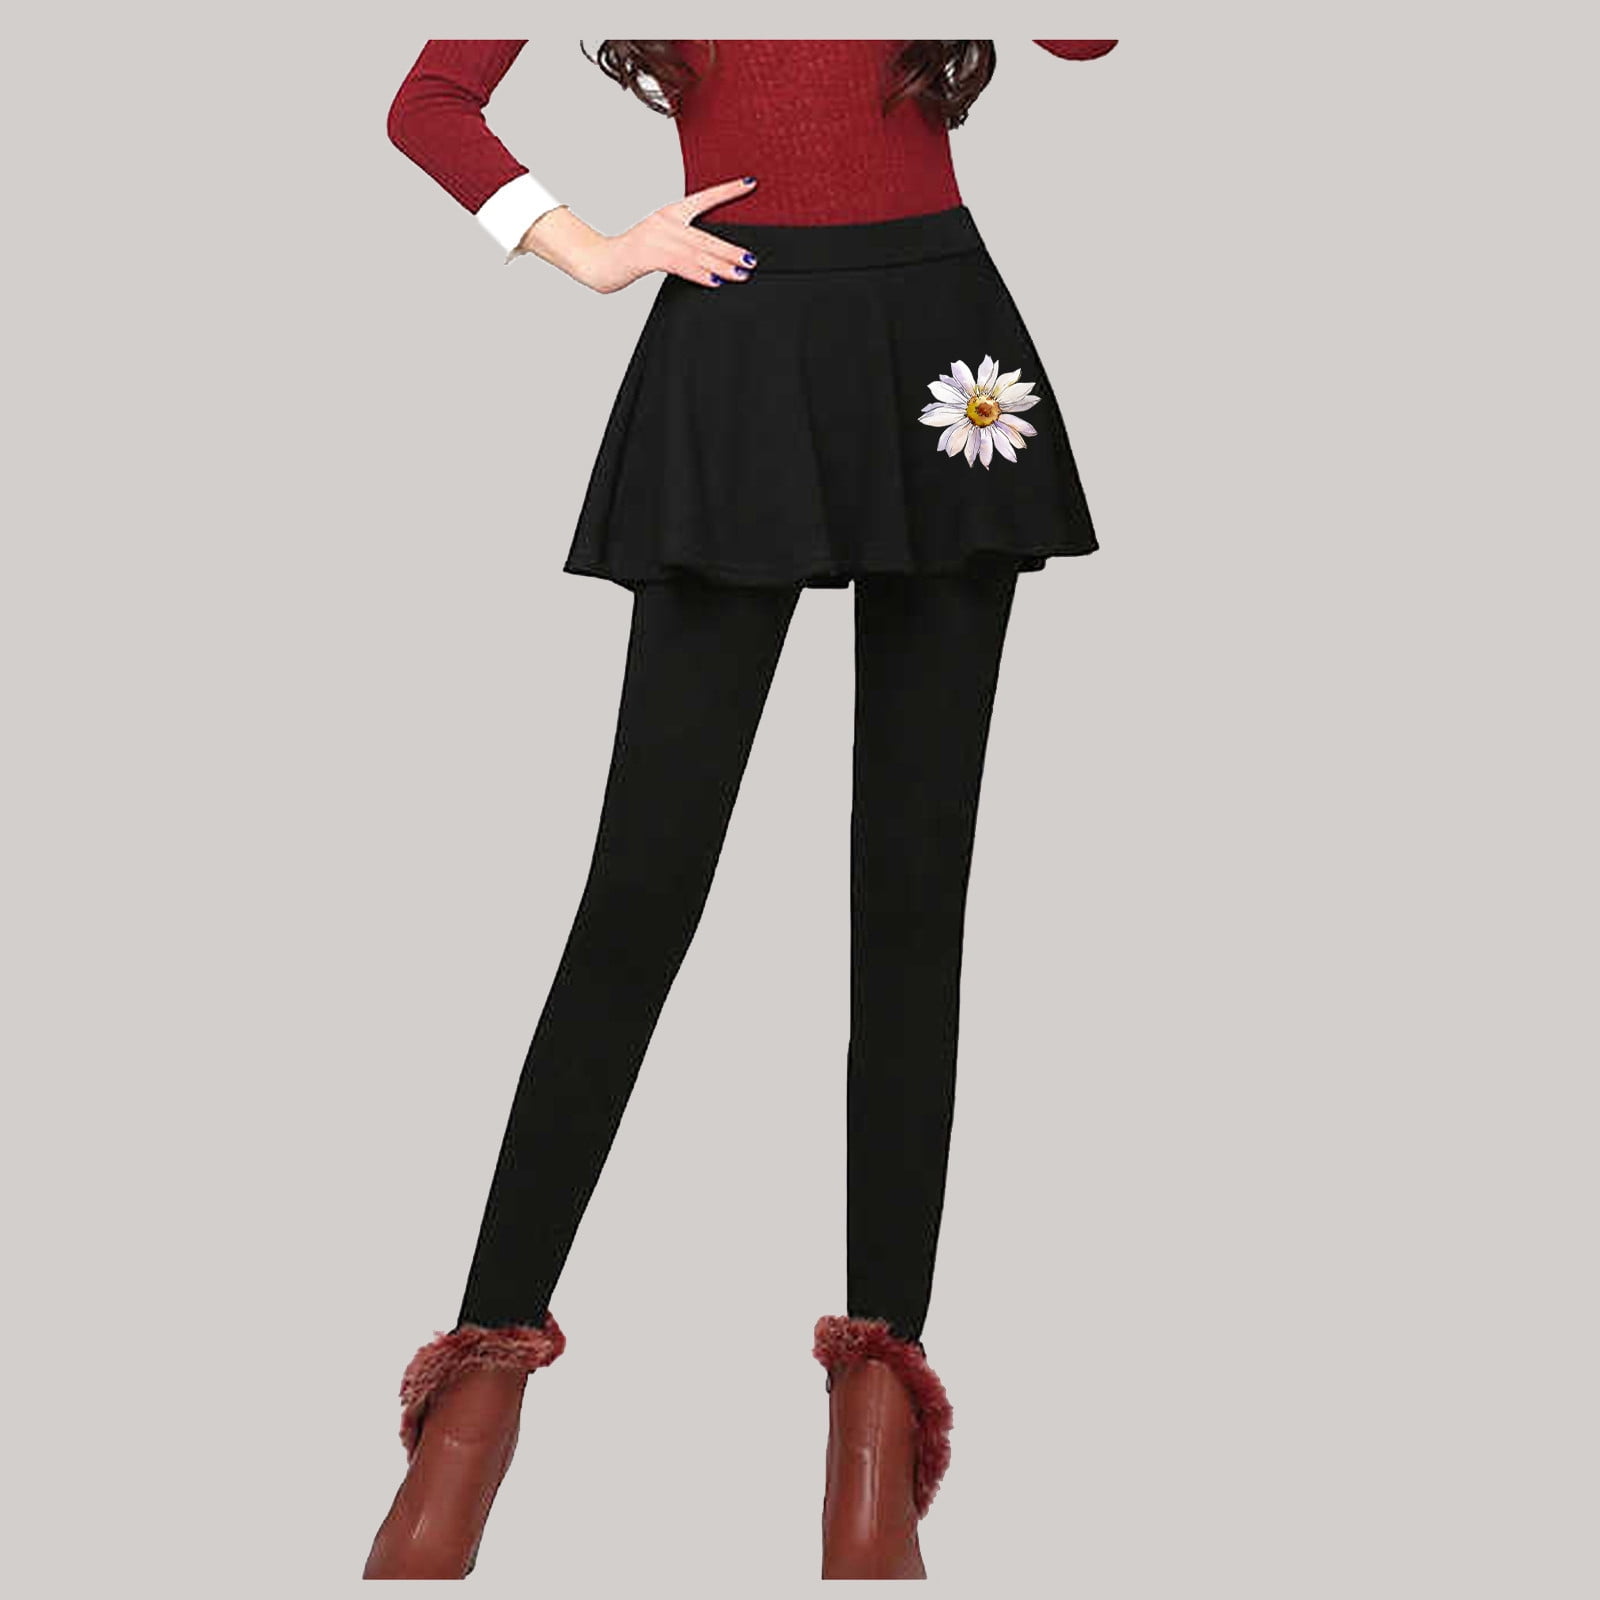 Lululemon Black Turquoise Striped Skirted Capri Leggings Skirt 6 | Skirt  leggings, Capri leggings, Leggings